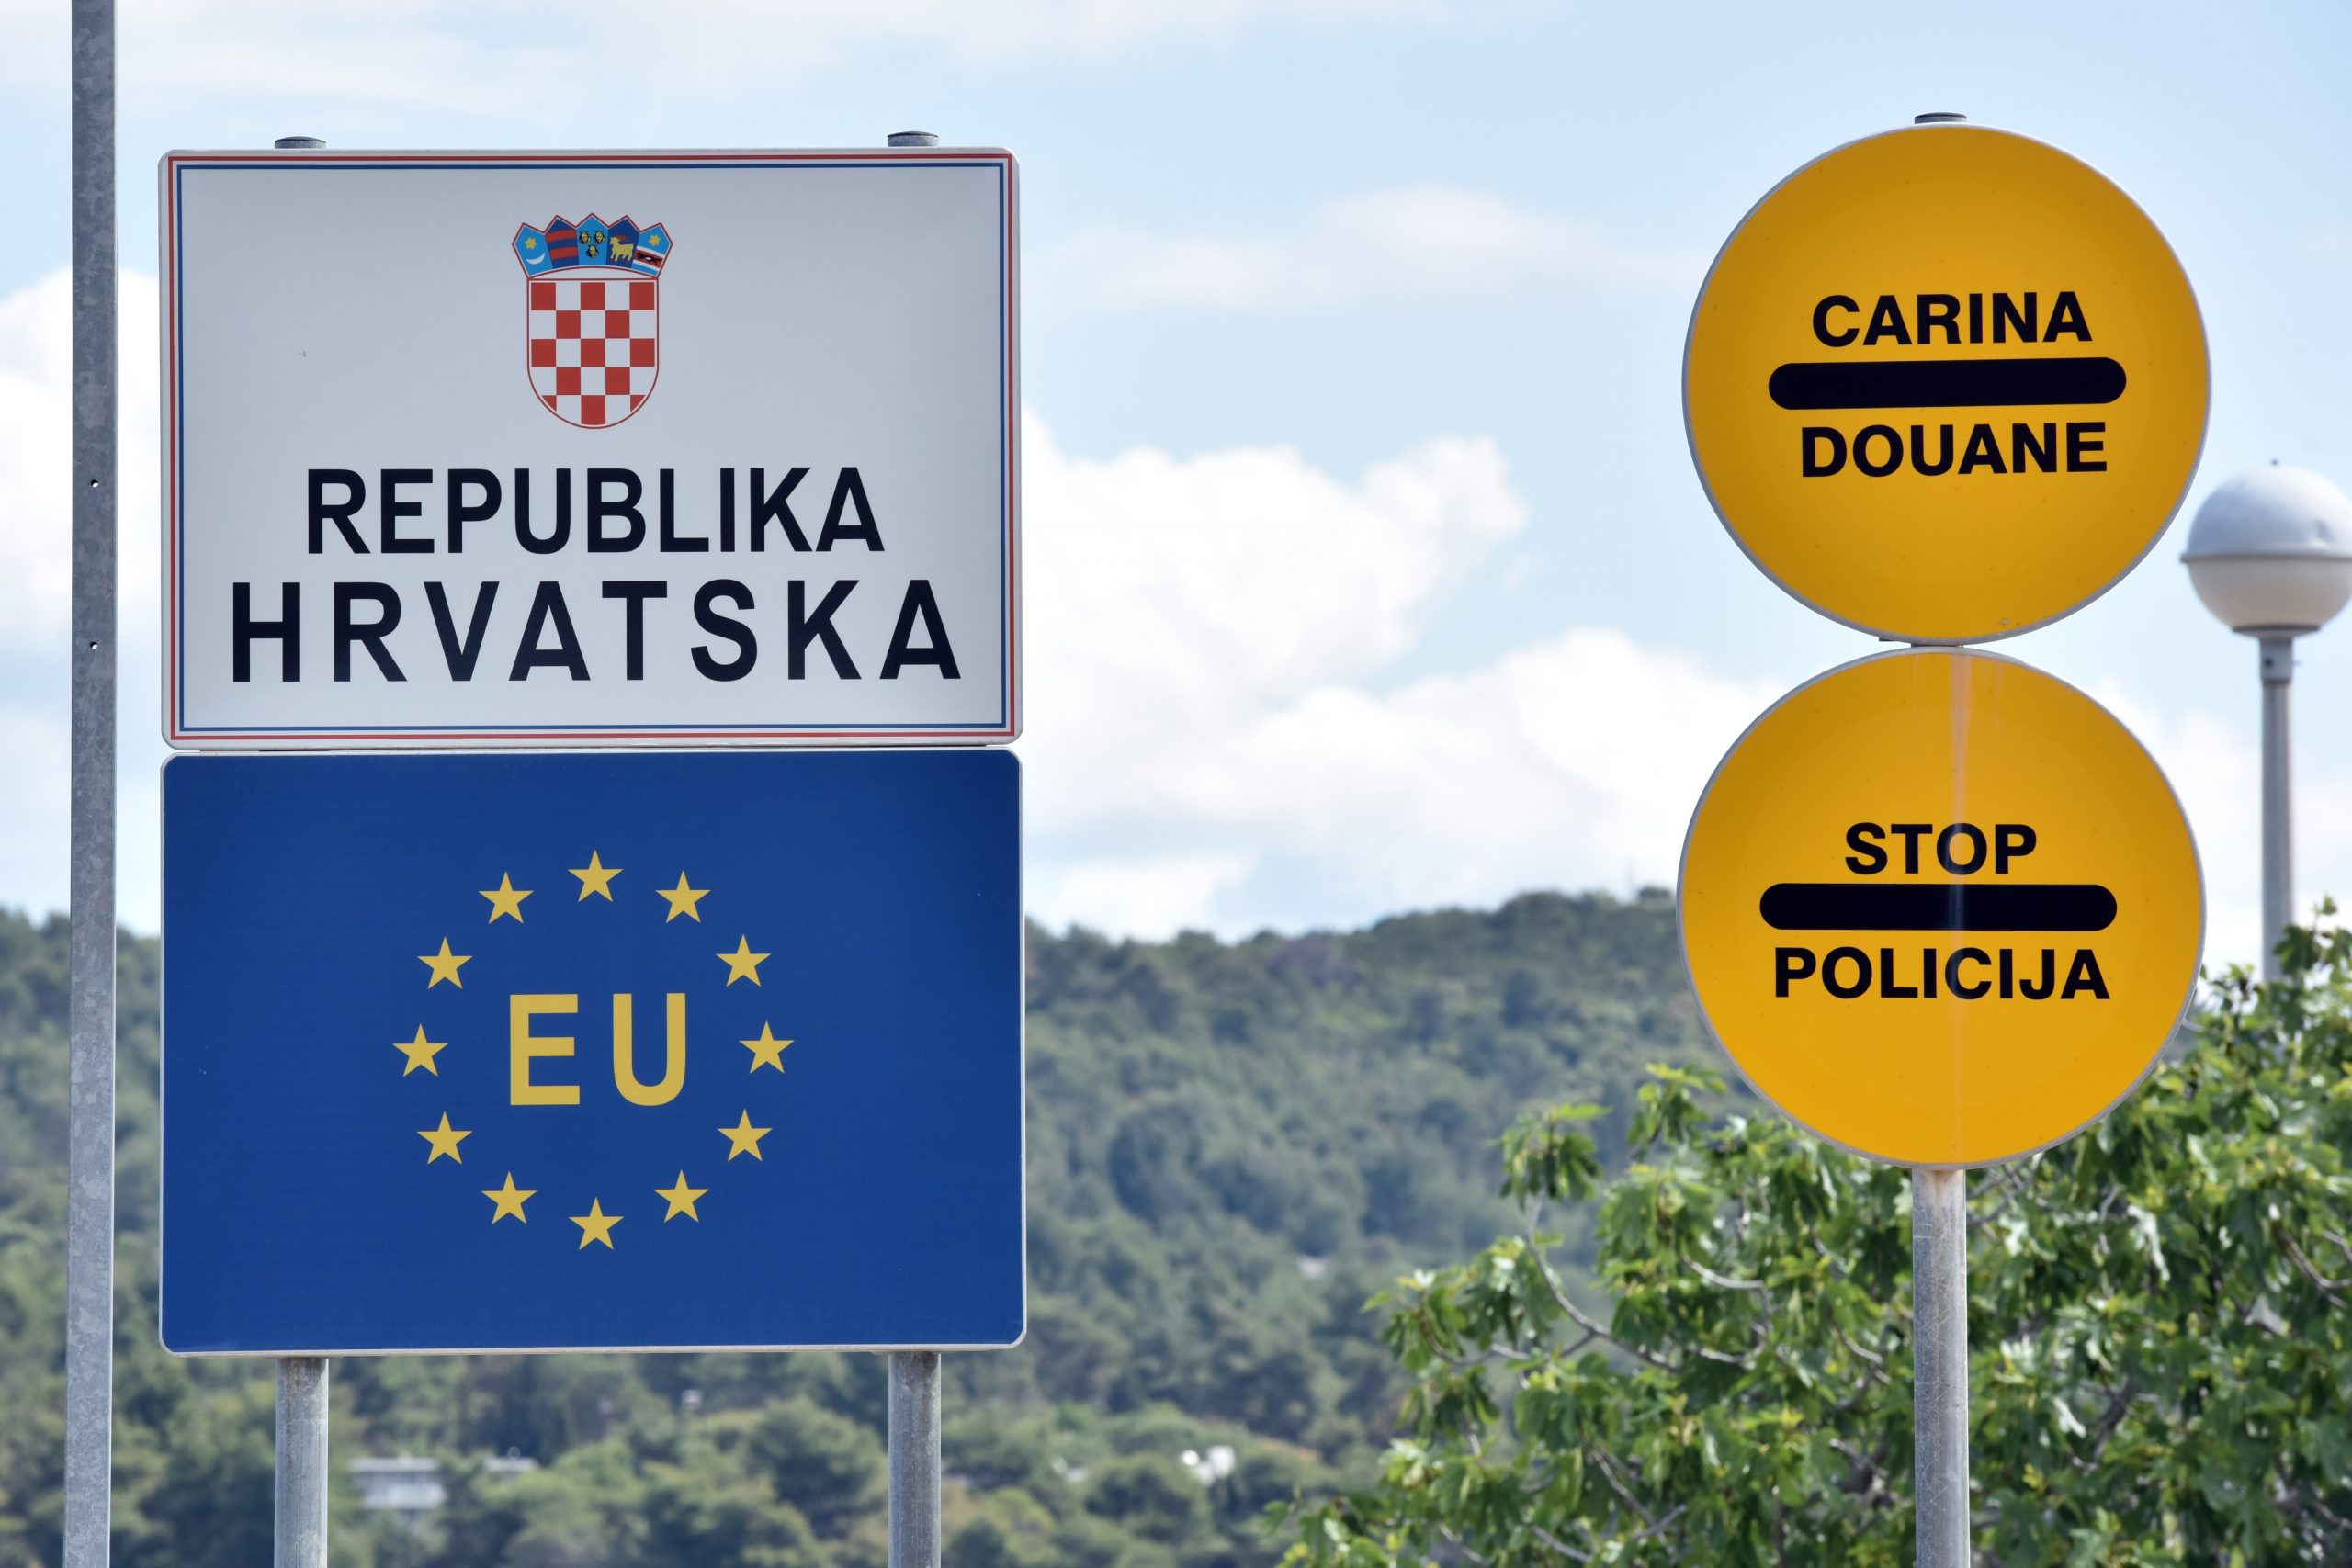 10.05.2017., Hvar - Oznaka drzavne granice - Republika Hrvatska i Europska unija
Photo: Hrvoje Jelavic/PIXSELL